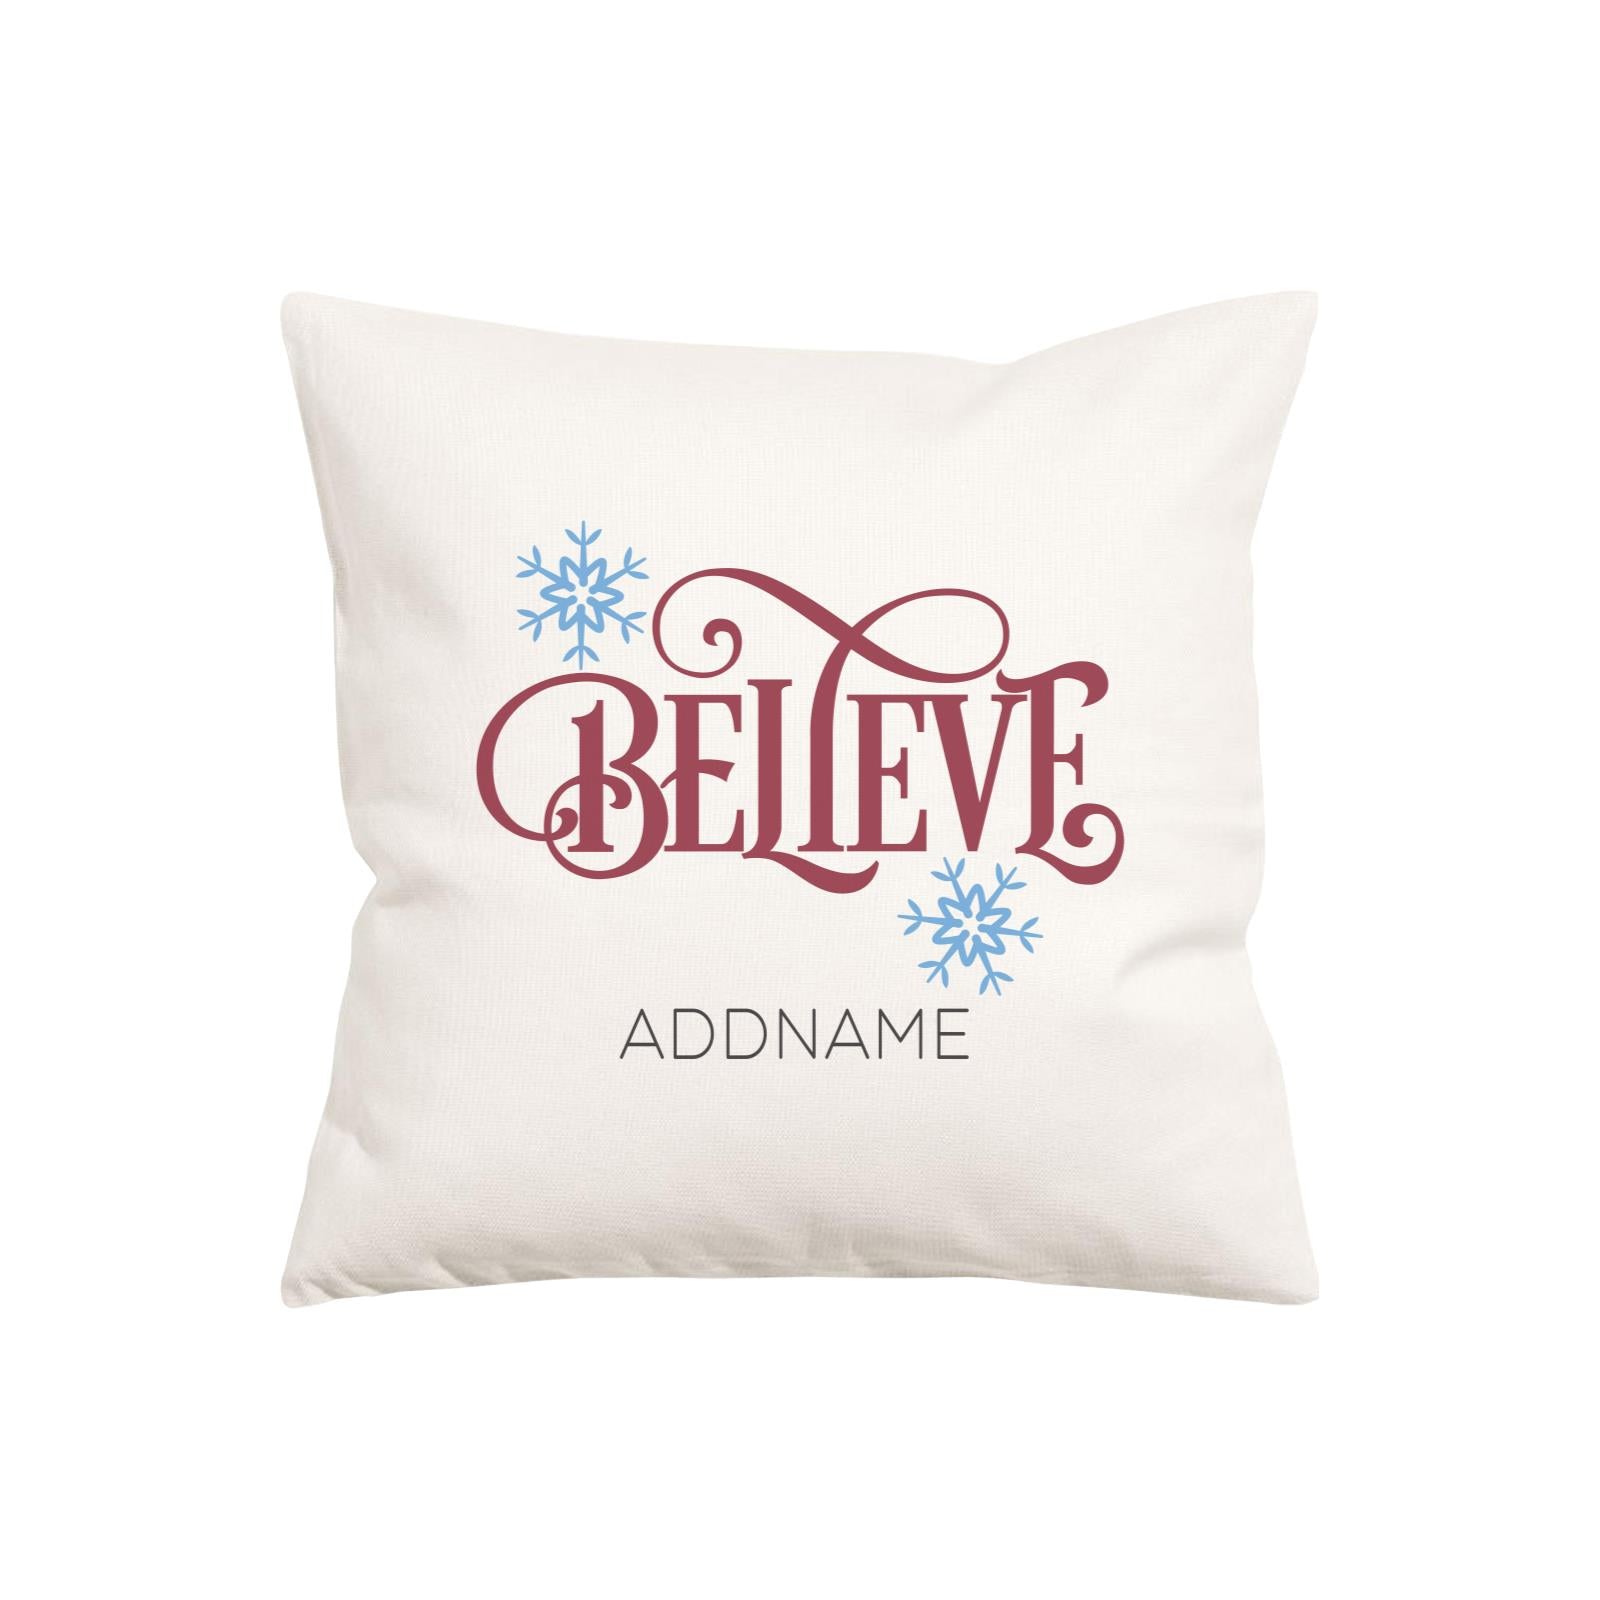 Xmas Believe with Snowflakes Pillow Pillow Cushion